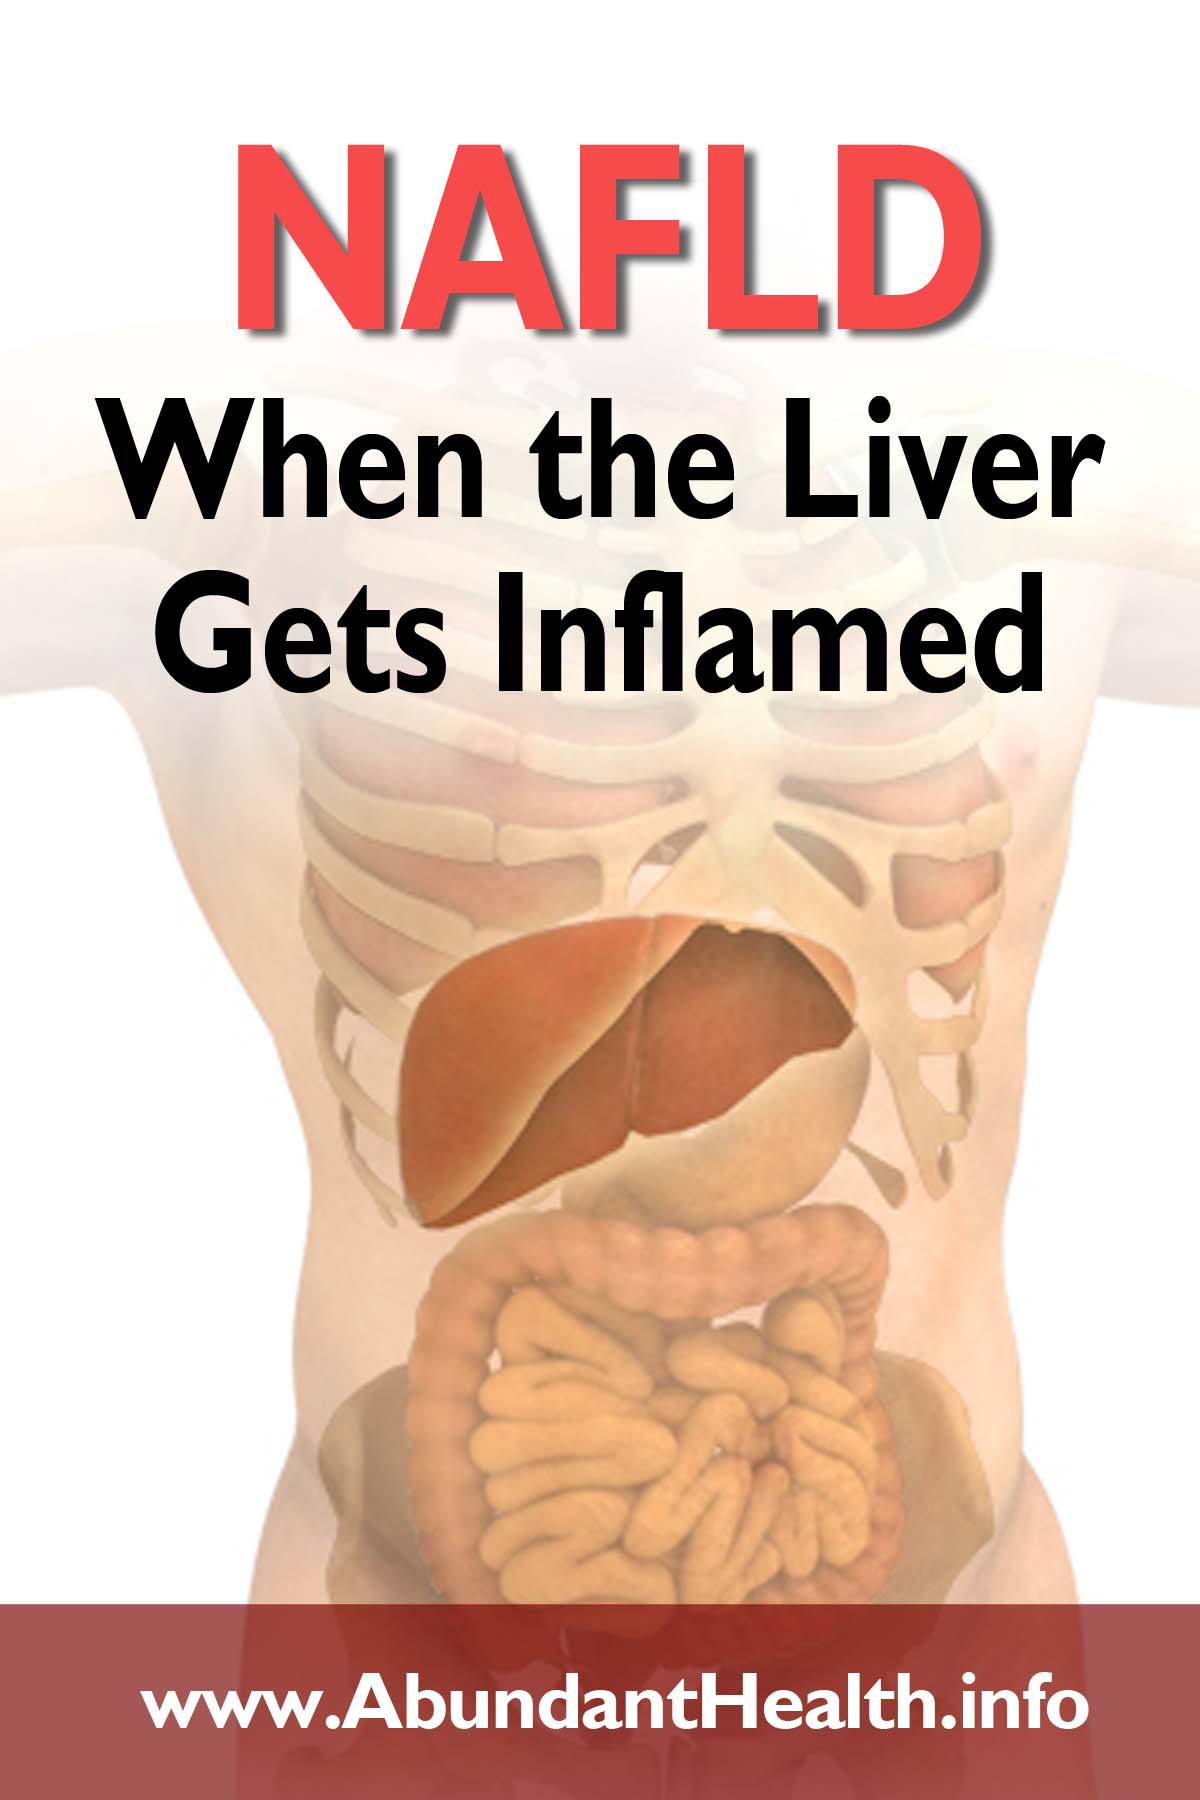 NAFLD - When the Liver Gets Inflamed